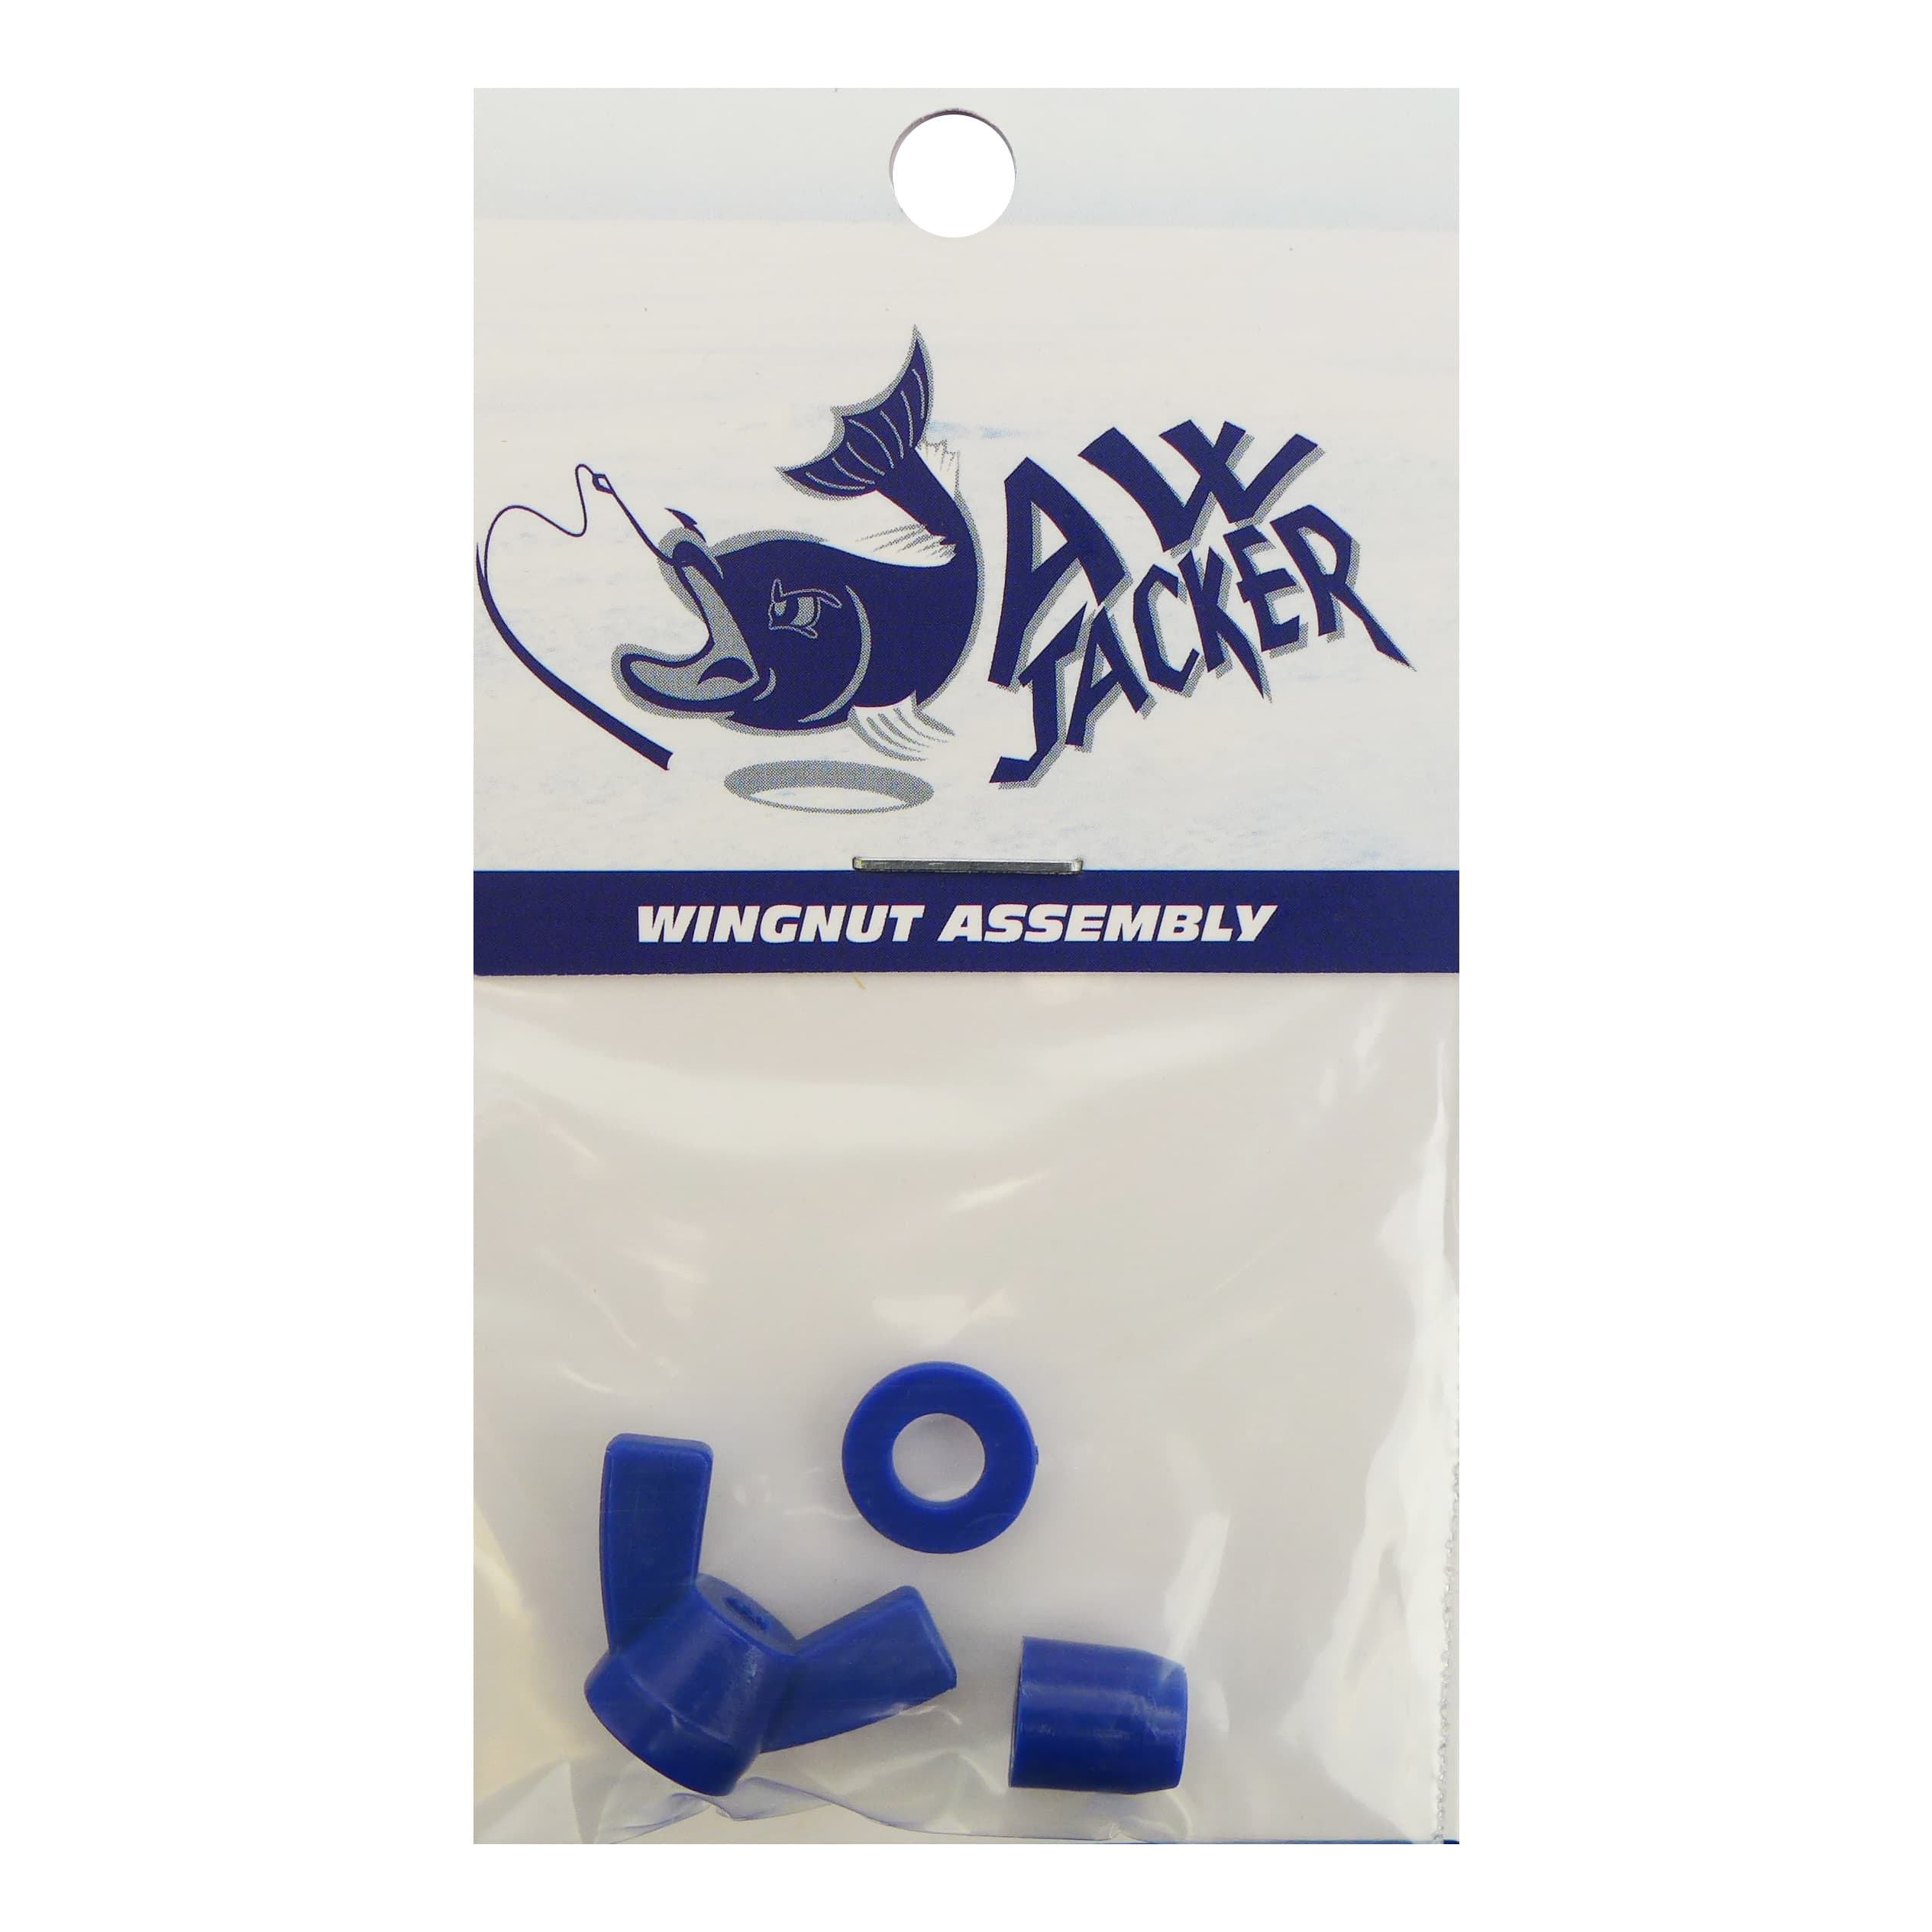 Wingnut Assembly for JawJacker Trigger